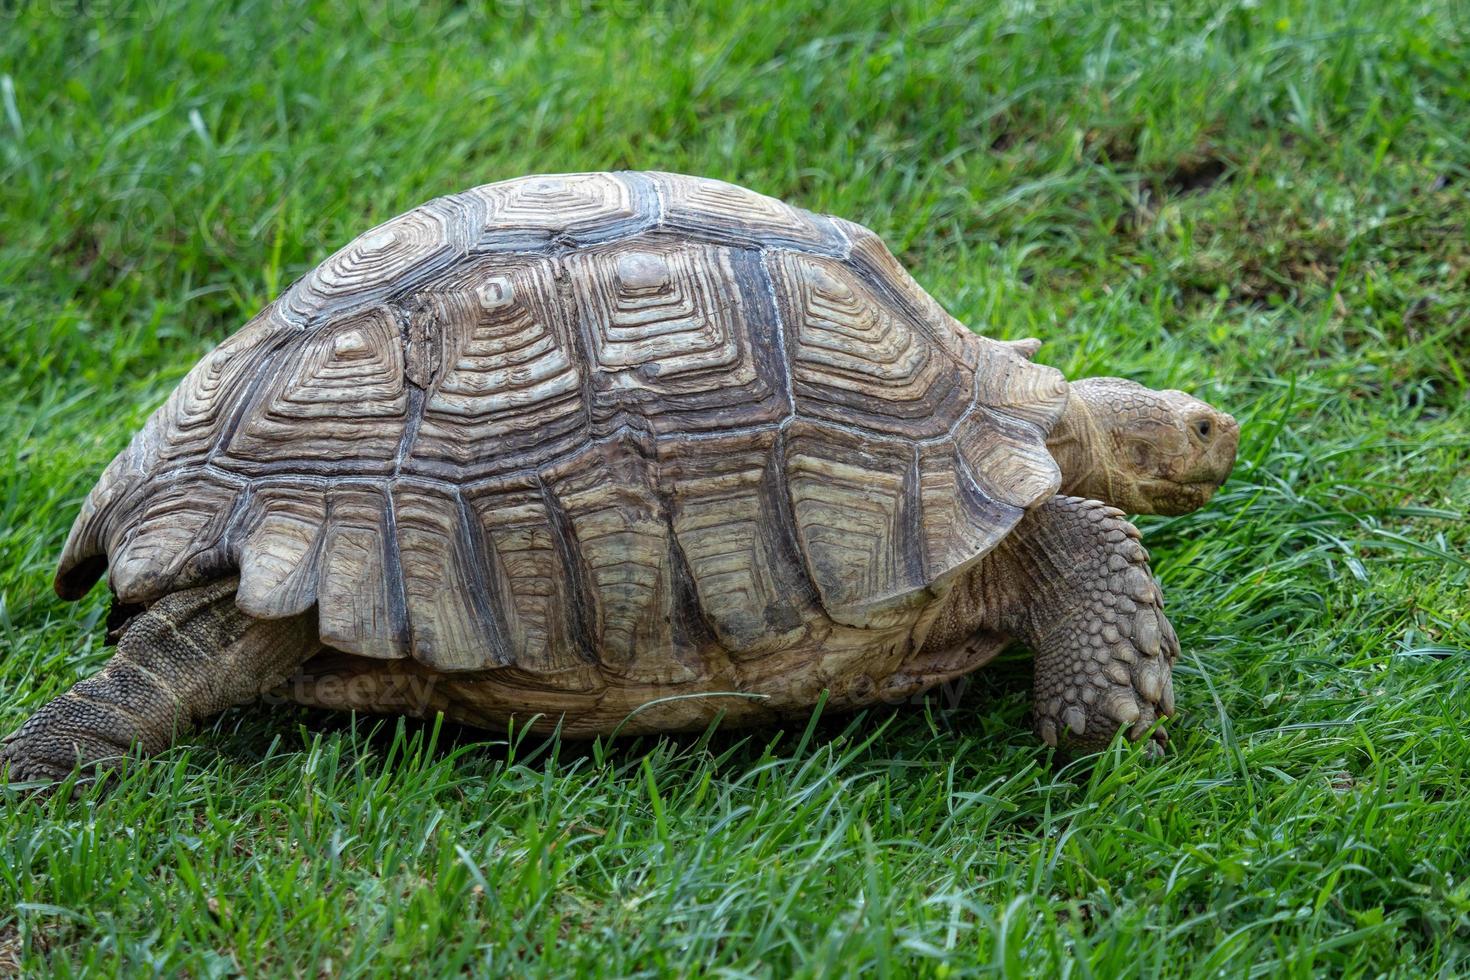 Afrikaanse aangespoord schildpad geochelone sulcata in de gras foto